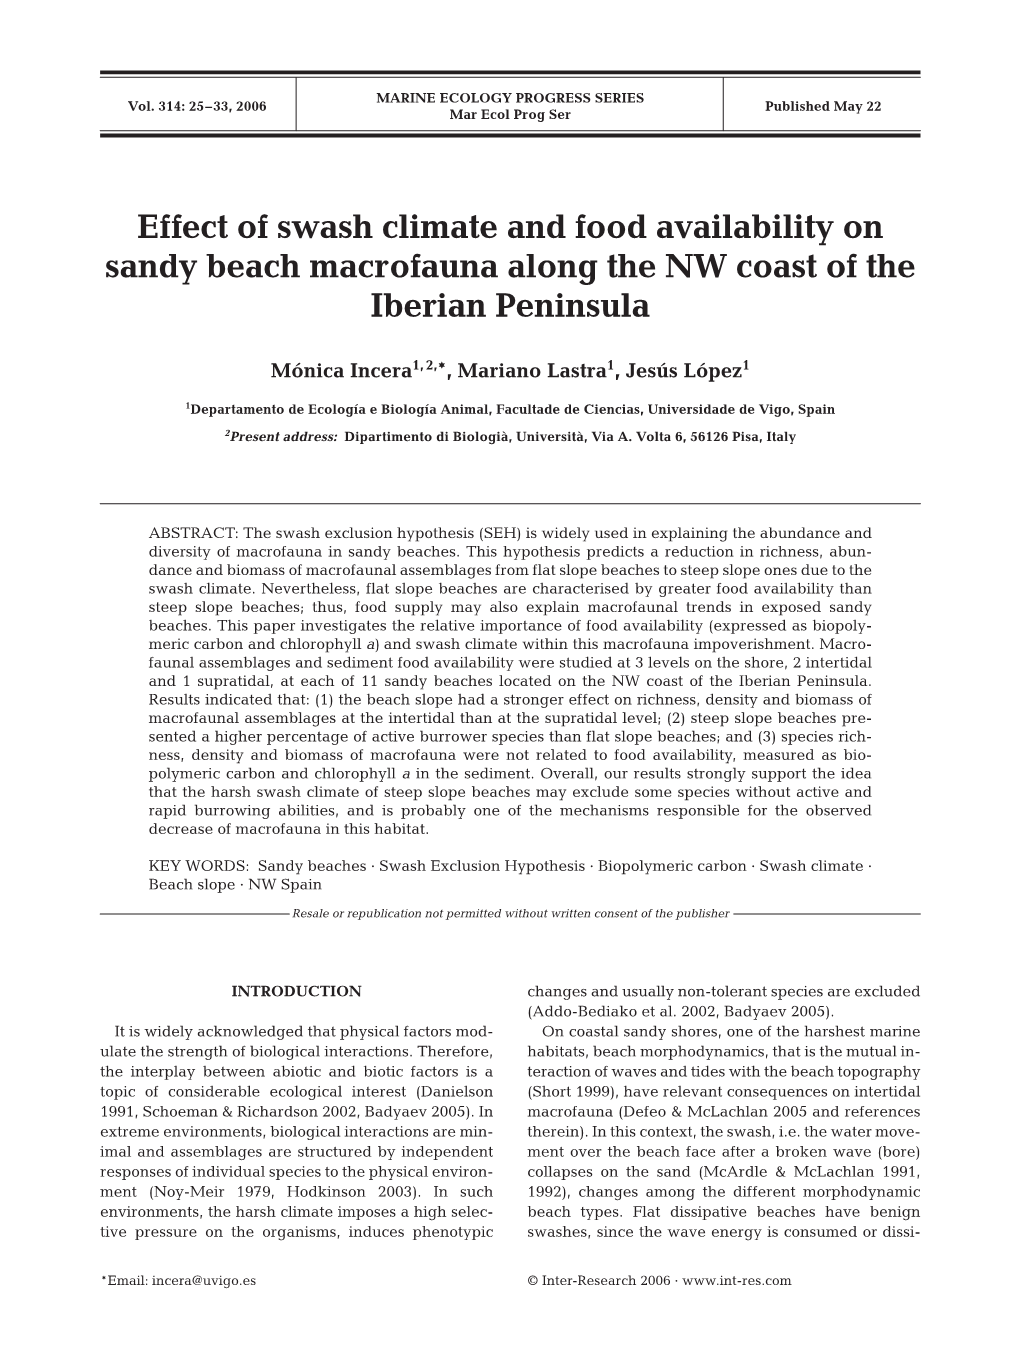 Effect of Swash Climate and Food Availability on Sandy Beach Macrofauna Along the NW Coast of the Iberian Peninsula